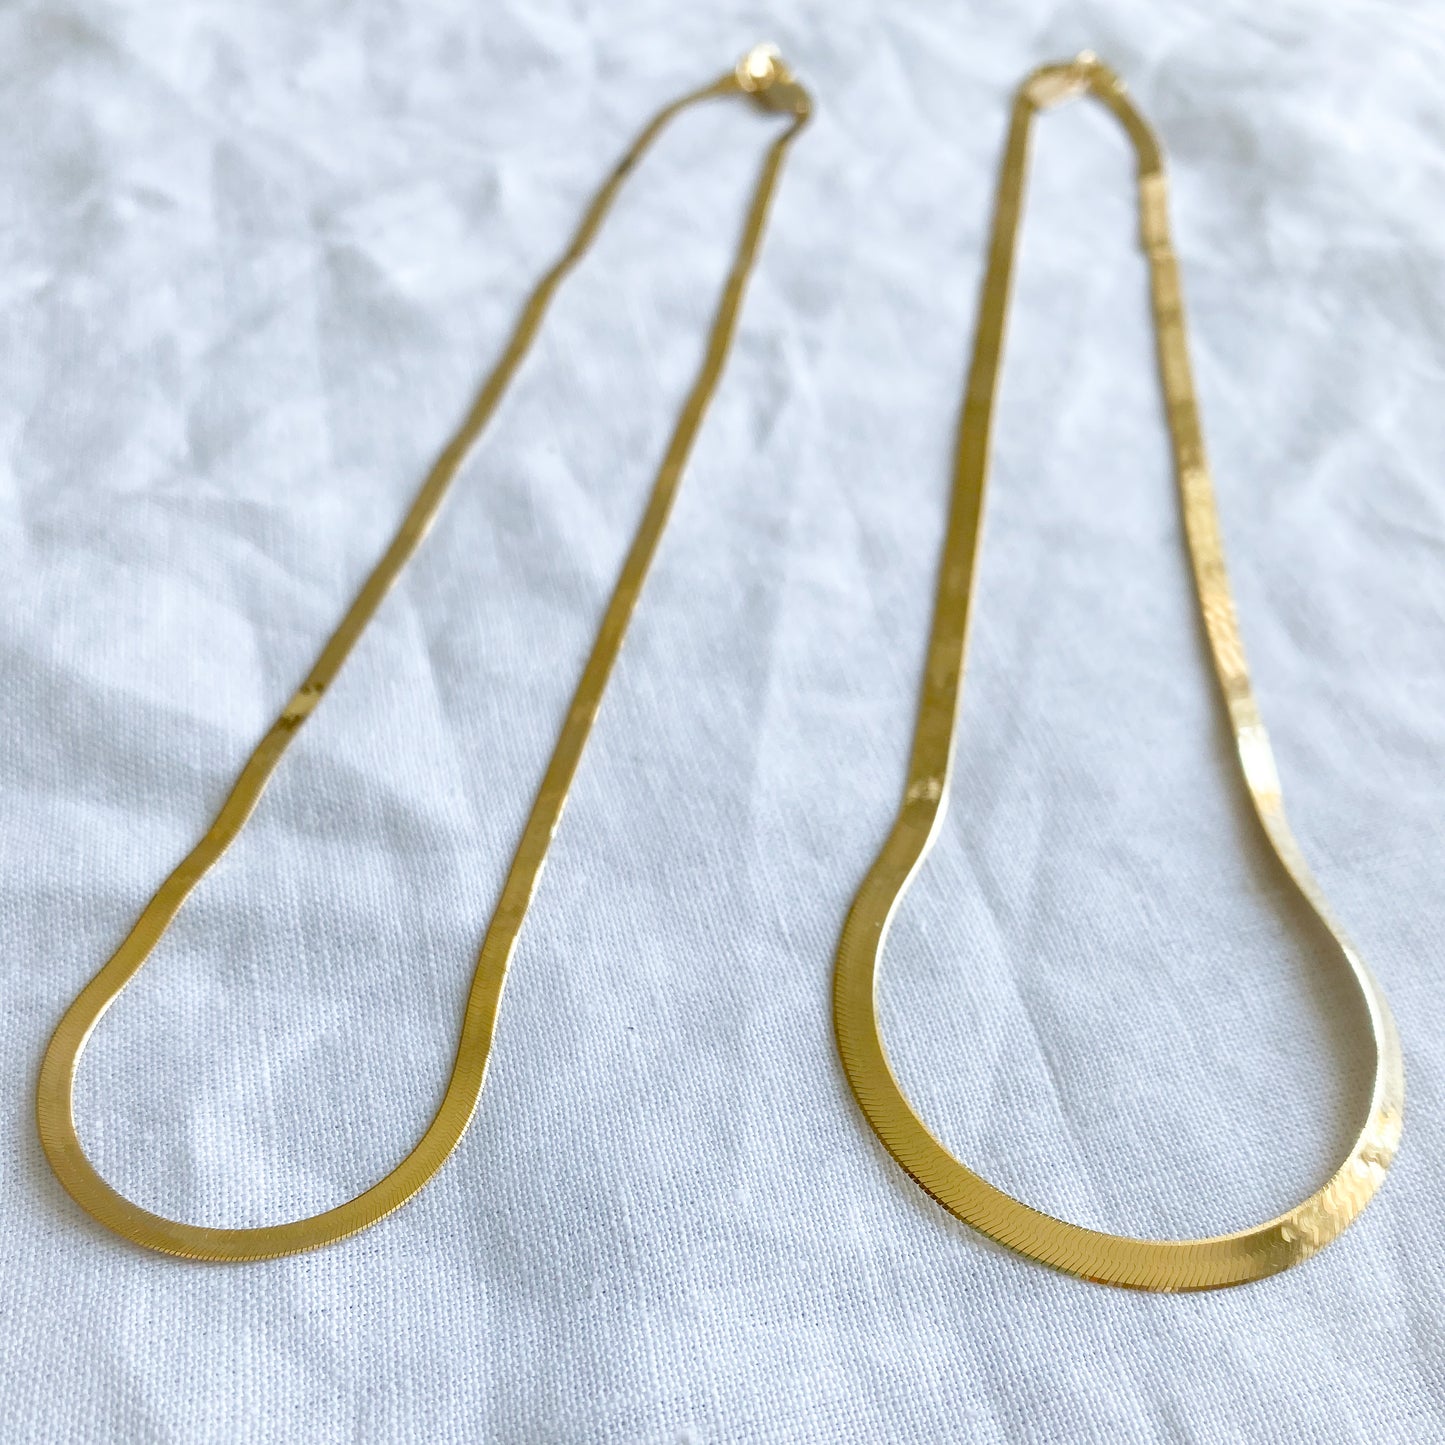 Baldwyn Gold 14KT Herringbone Chain Necklace - BelleStyle 18 inch chain necklace unisex precious metal